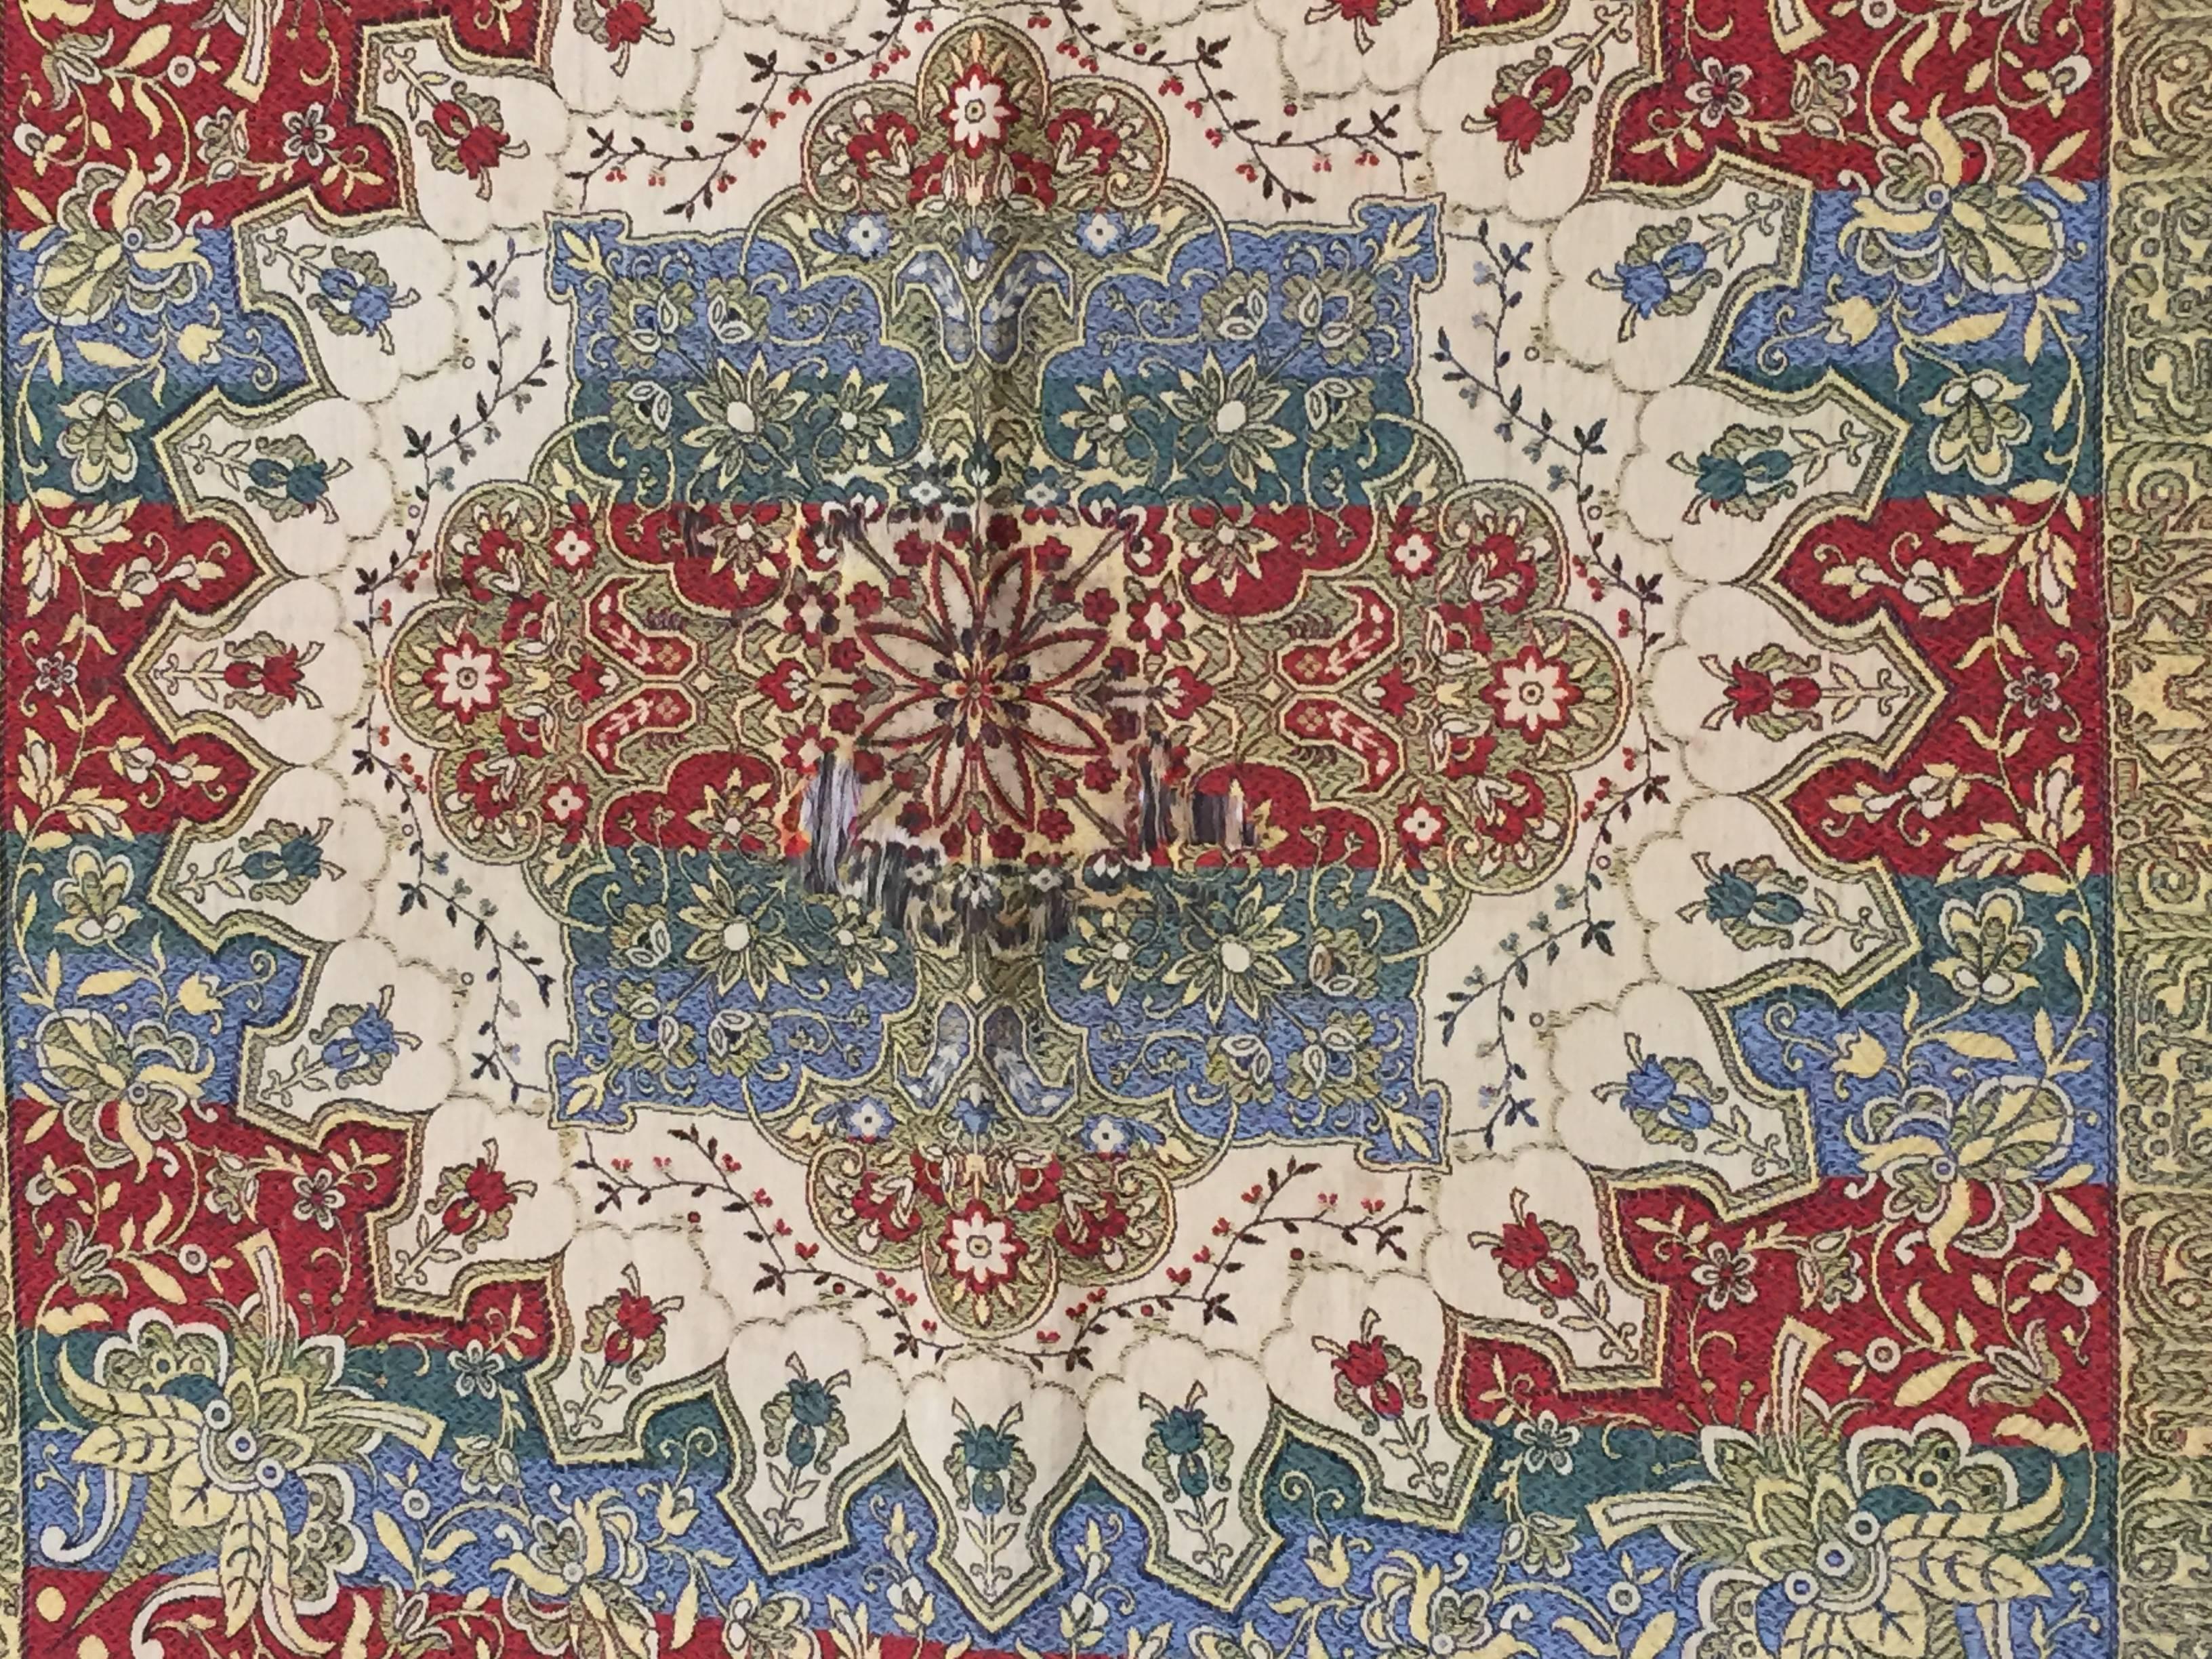 Hand-Crafted Spanish Moorish Wall Hanging Tapestry with Arabic Writing